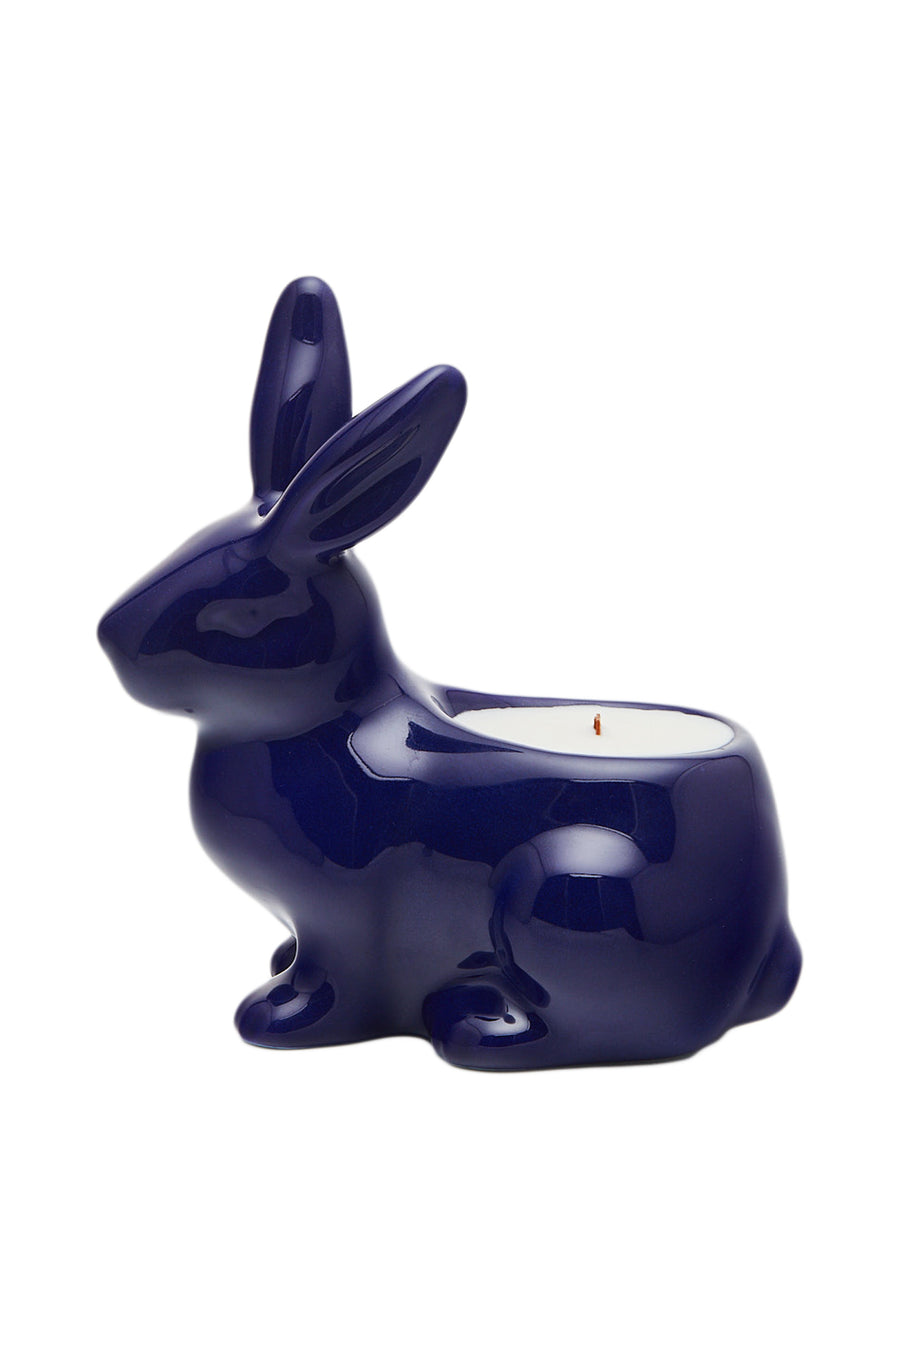 Blue Rabbit Candle